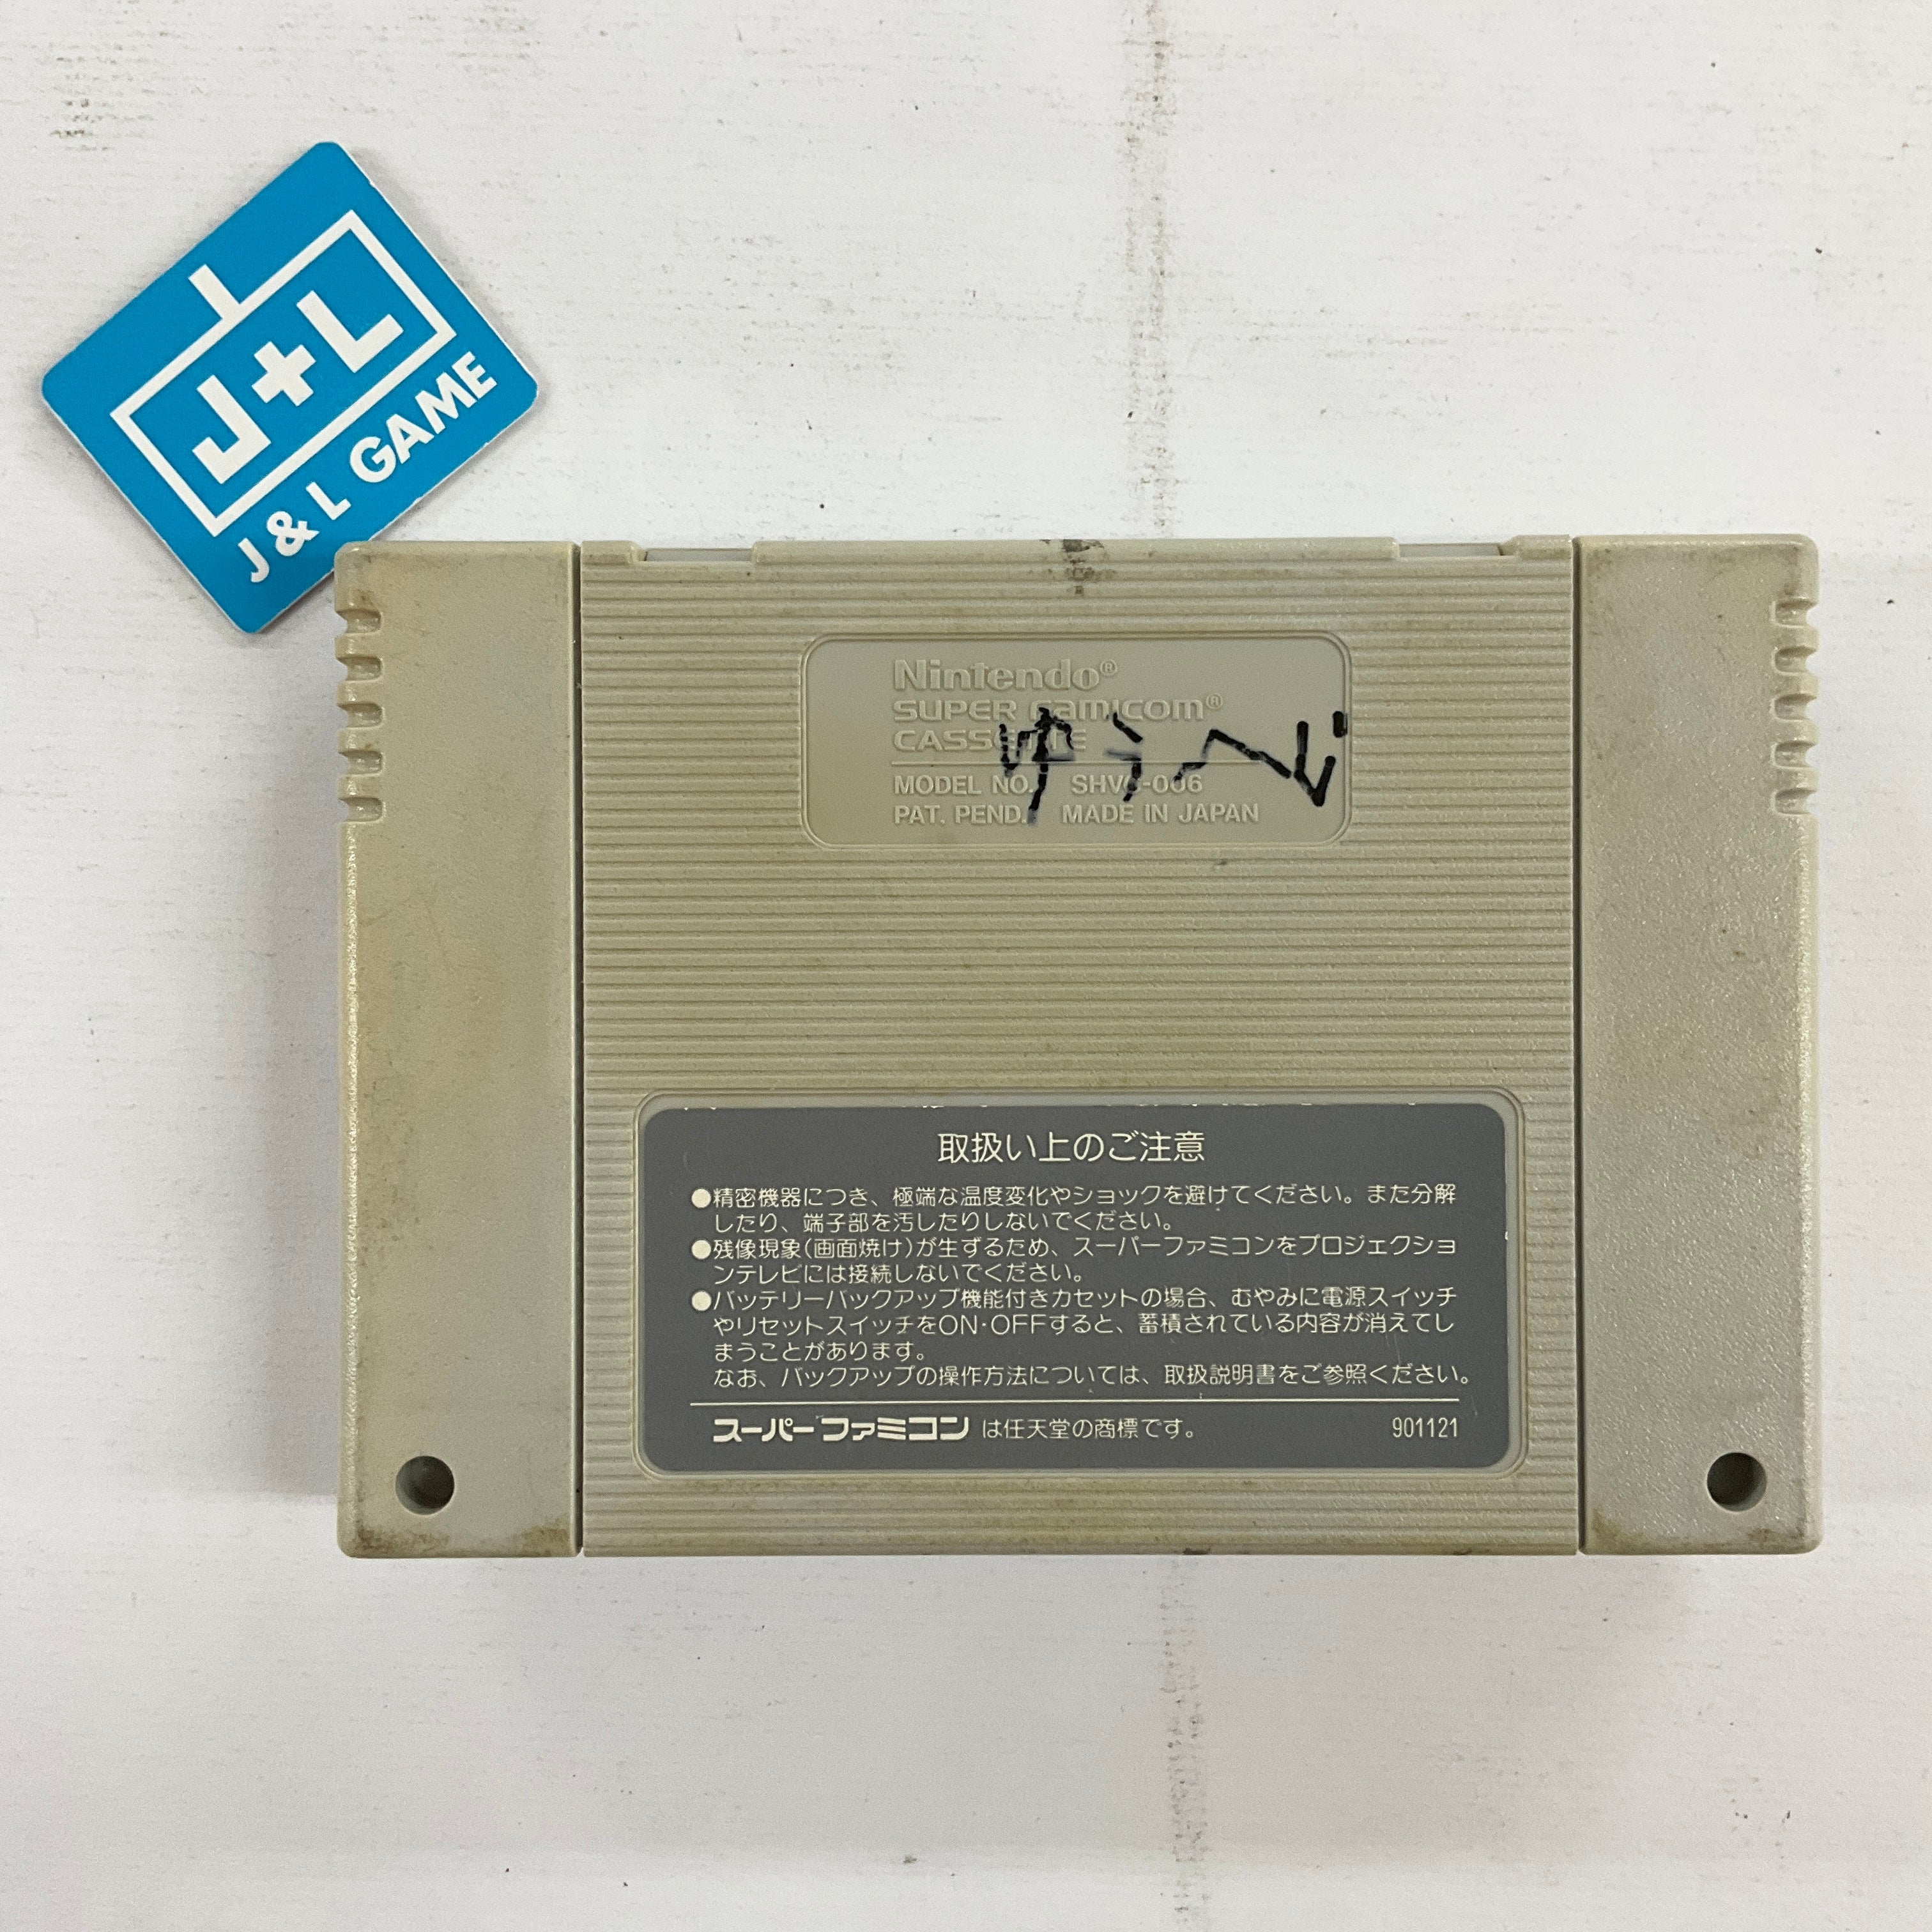 Gradius III - Super Famicom (Japanese Import) [Pre-Owned] Video Games Konami   